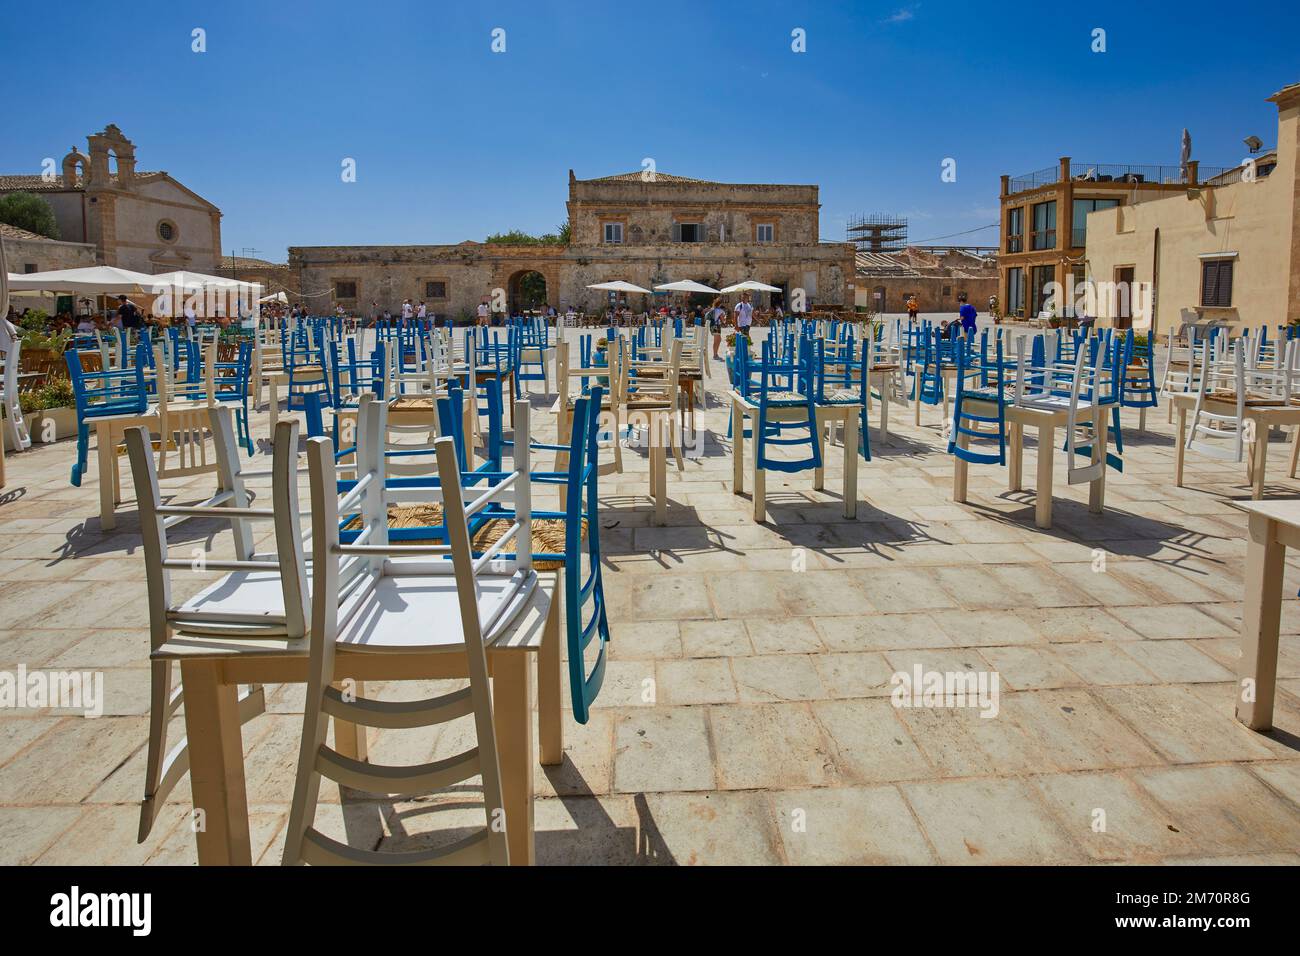 The main square of the historic village Marzamemi, Province of Syracuse, Sicily, Italy Stock Photo